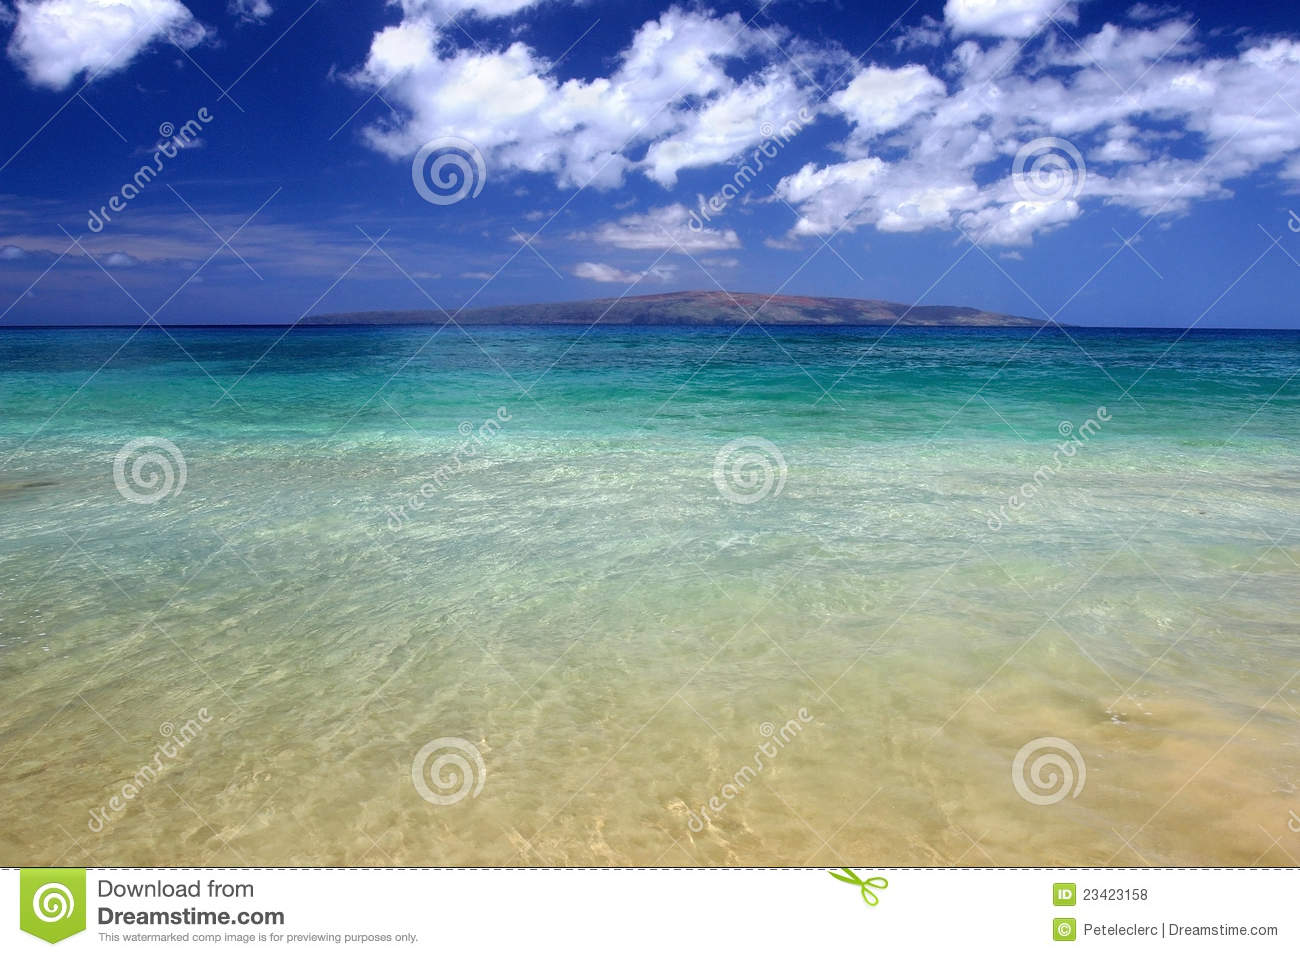 Maui Hawaii Beaches